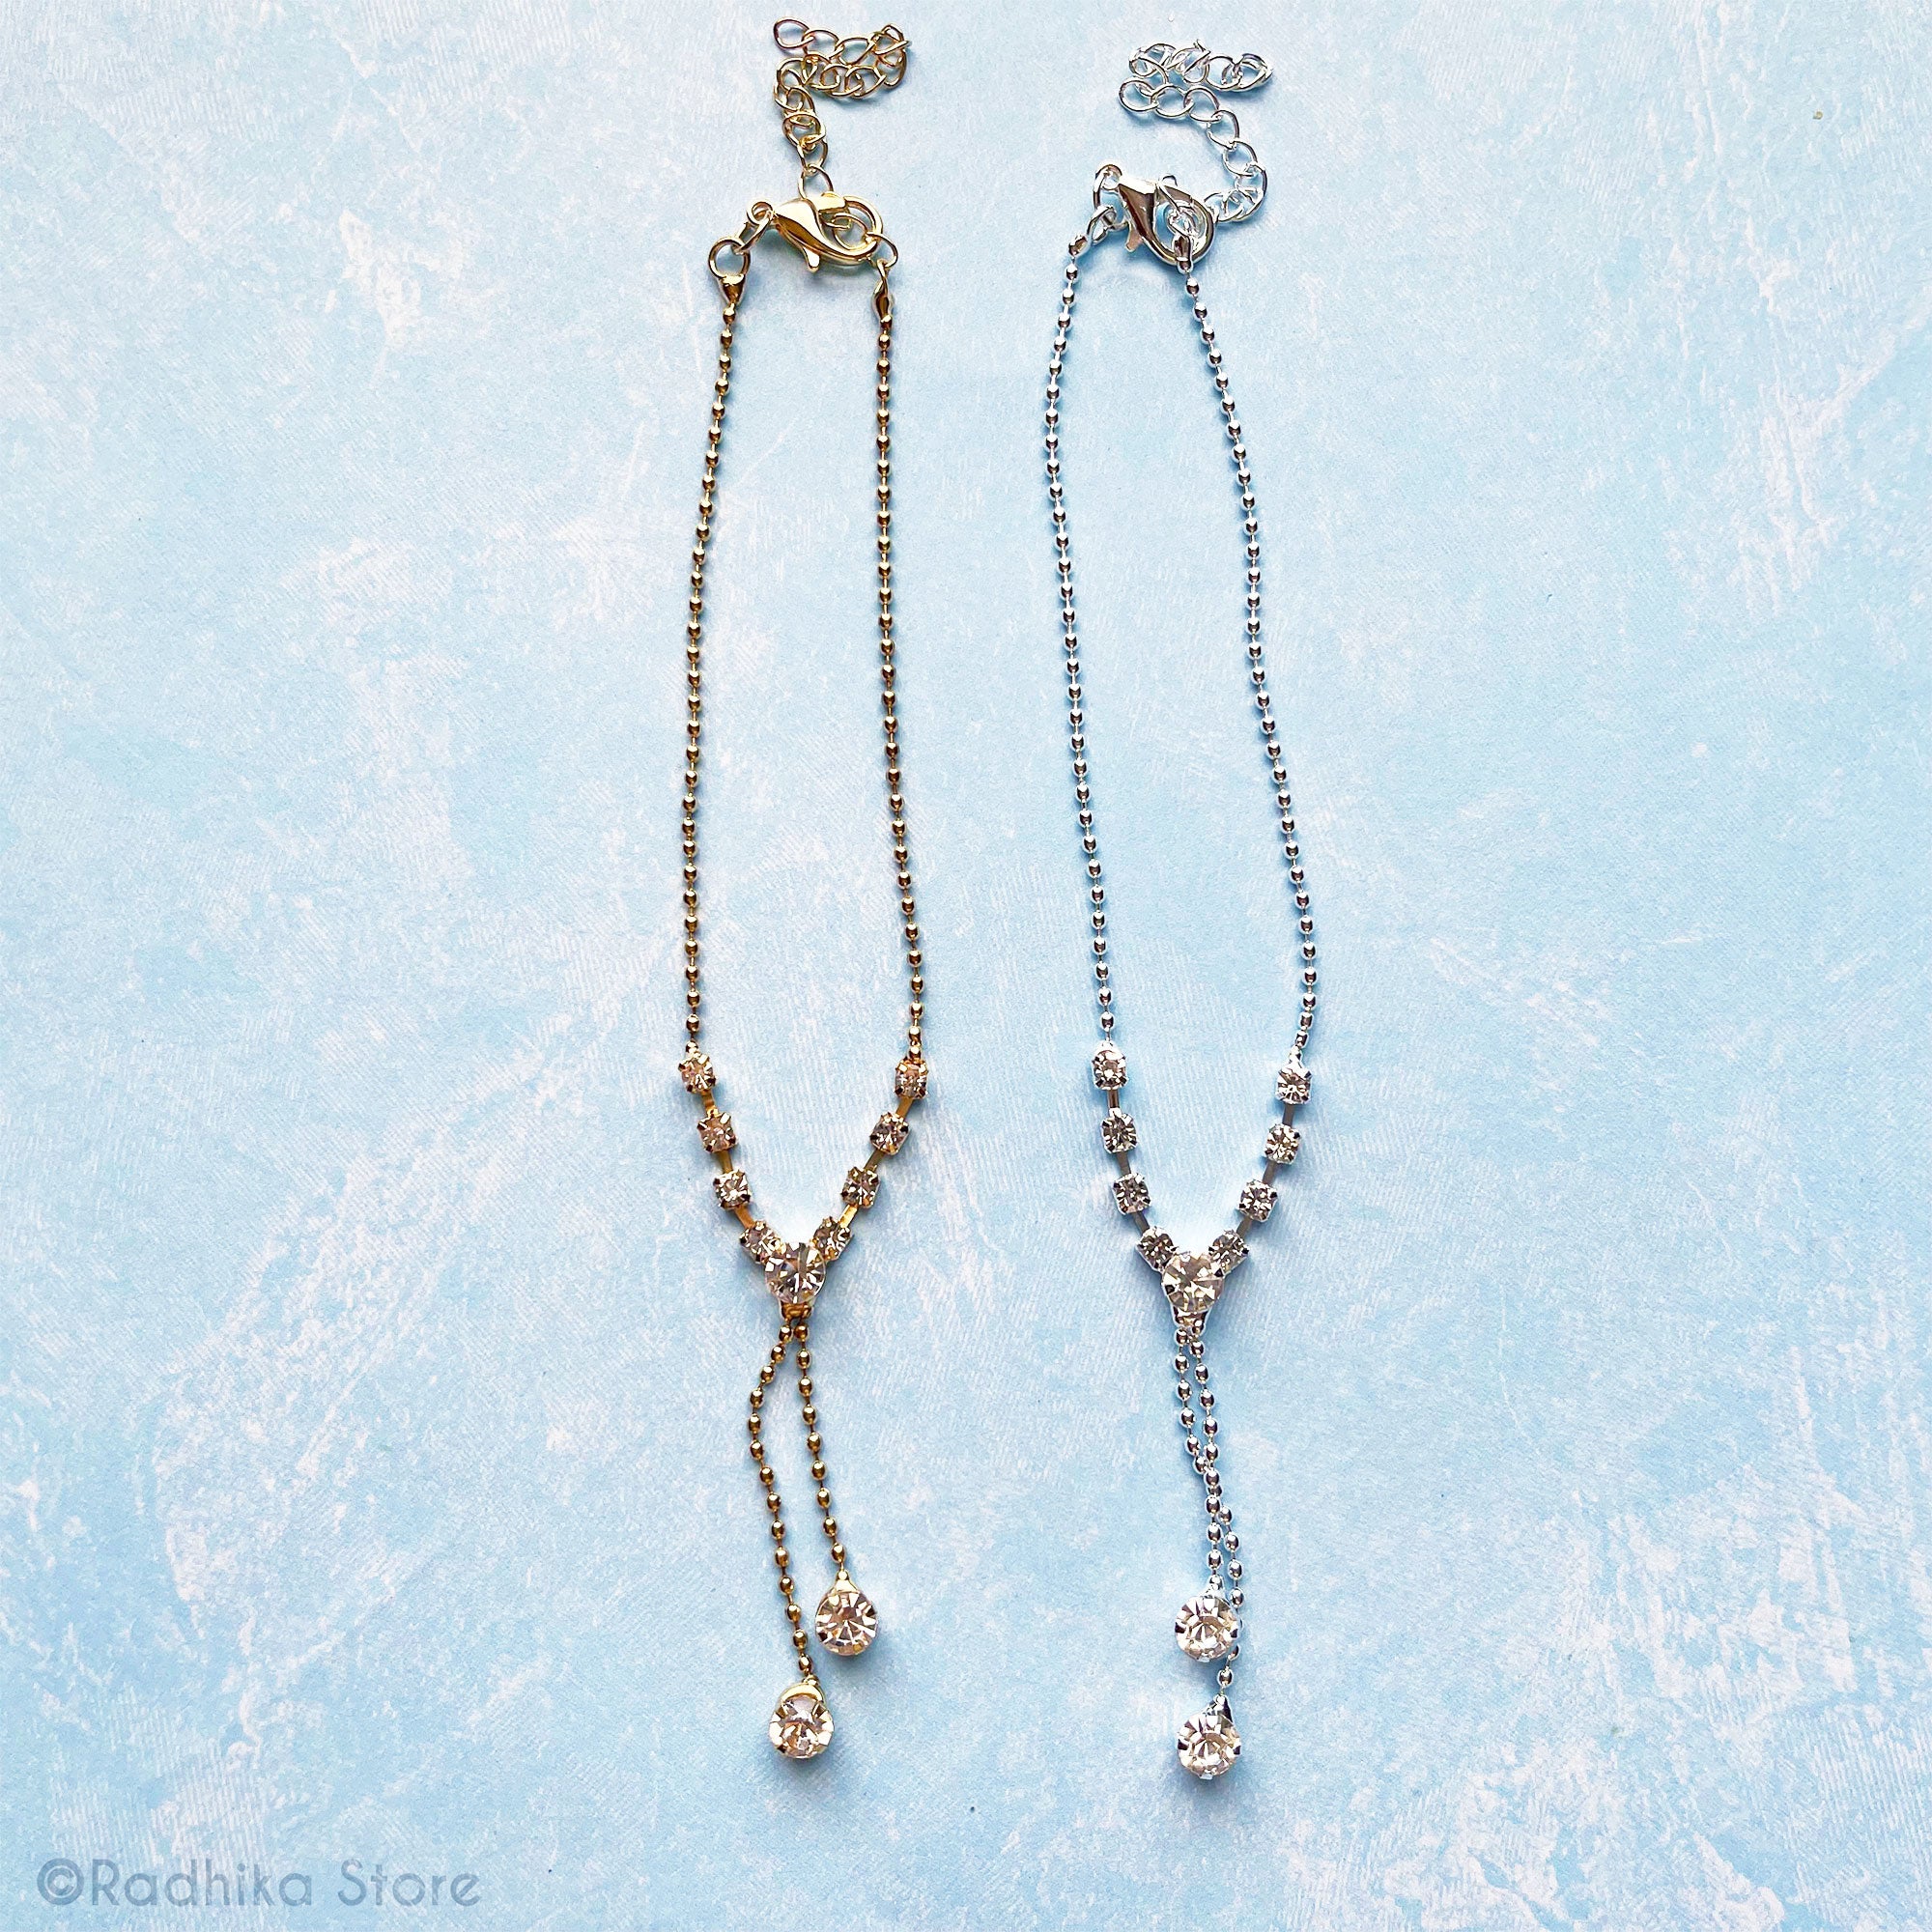 Dangling Rhinestones- Deity Necklaces - Choose Silver or Gold Color -